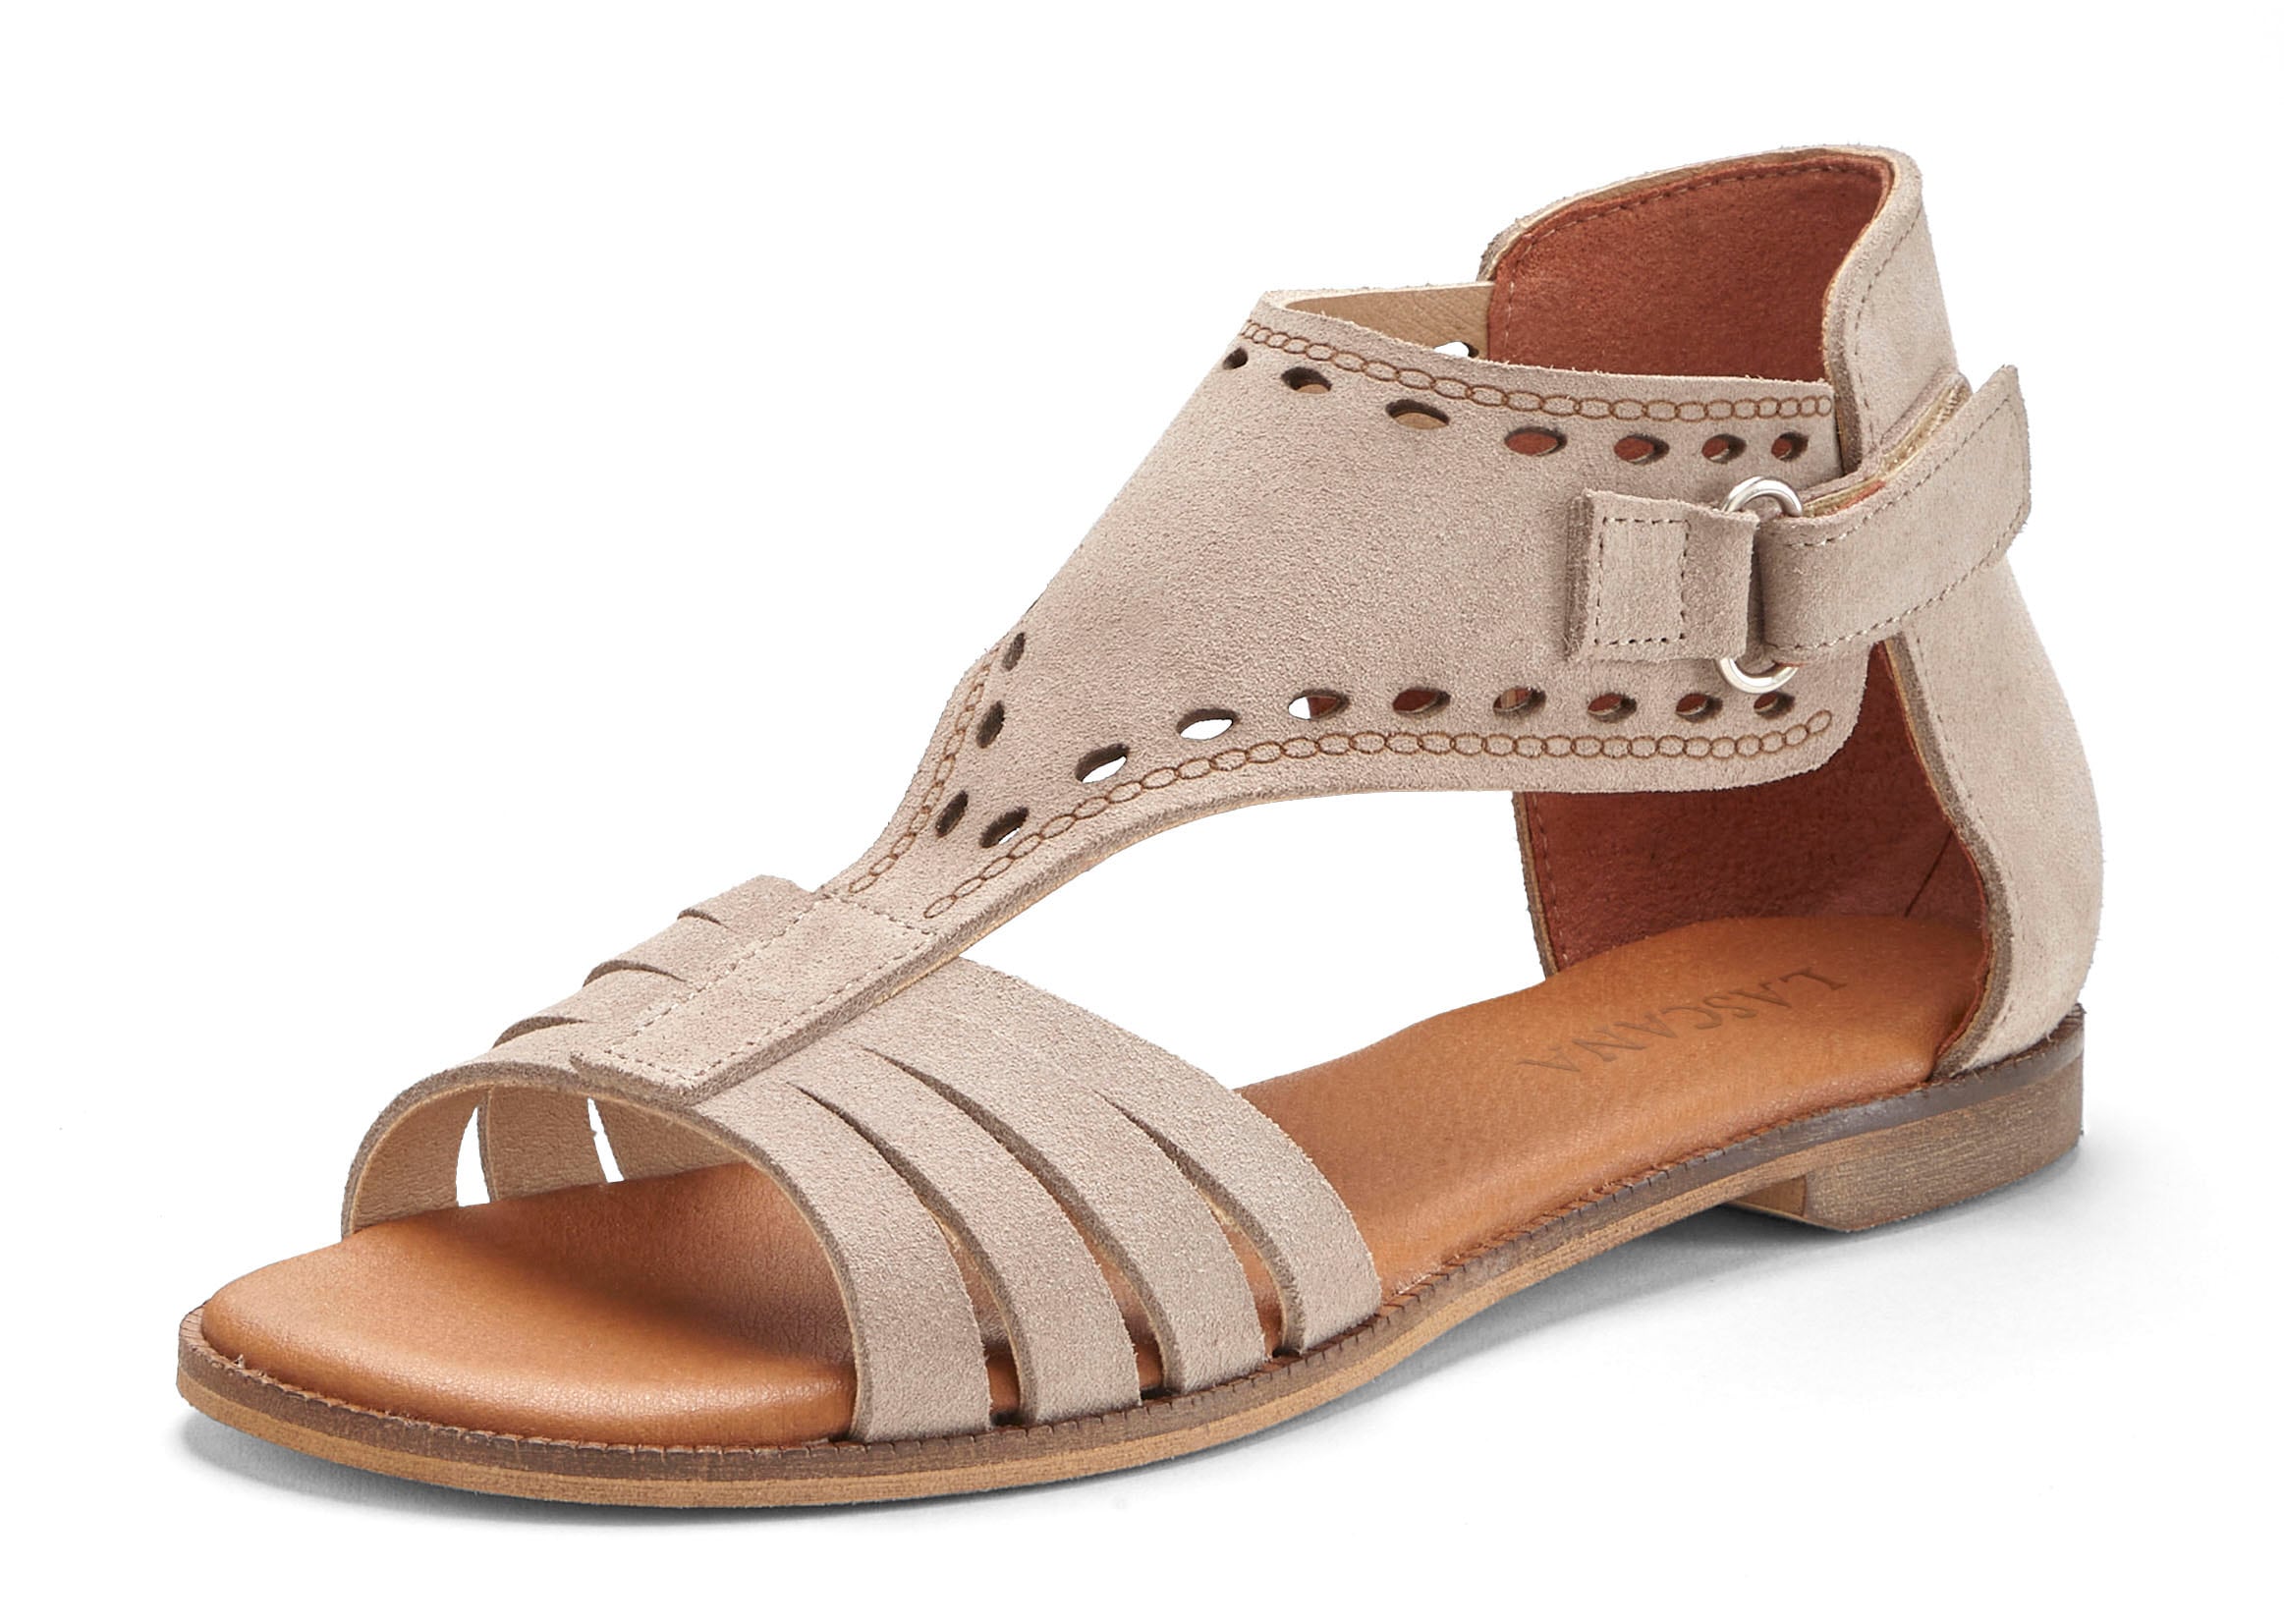 LASCANA Sandale, Sandalette, Sommerschuh aus hochwertigem Leder mit kleinen Cut-Outs